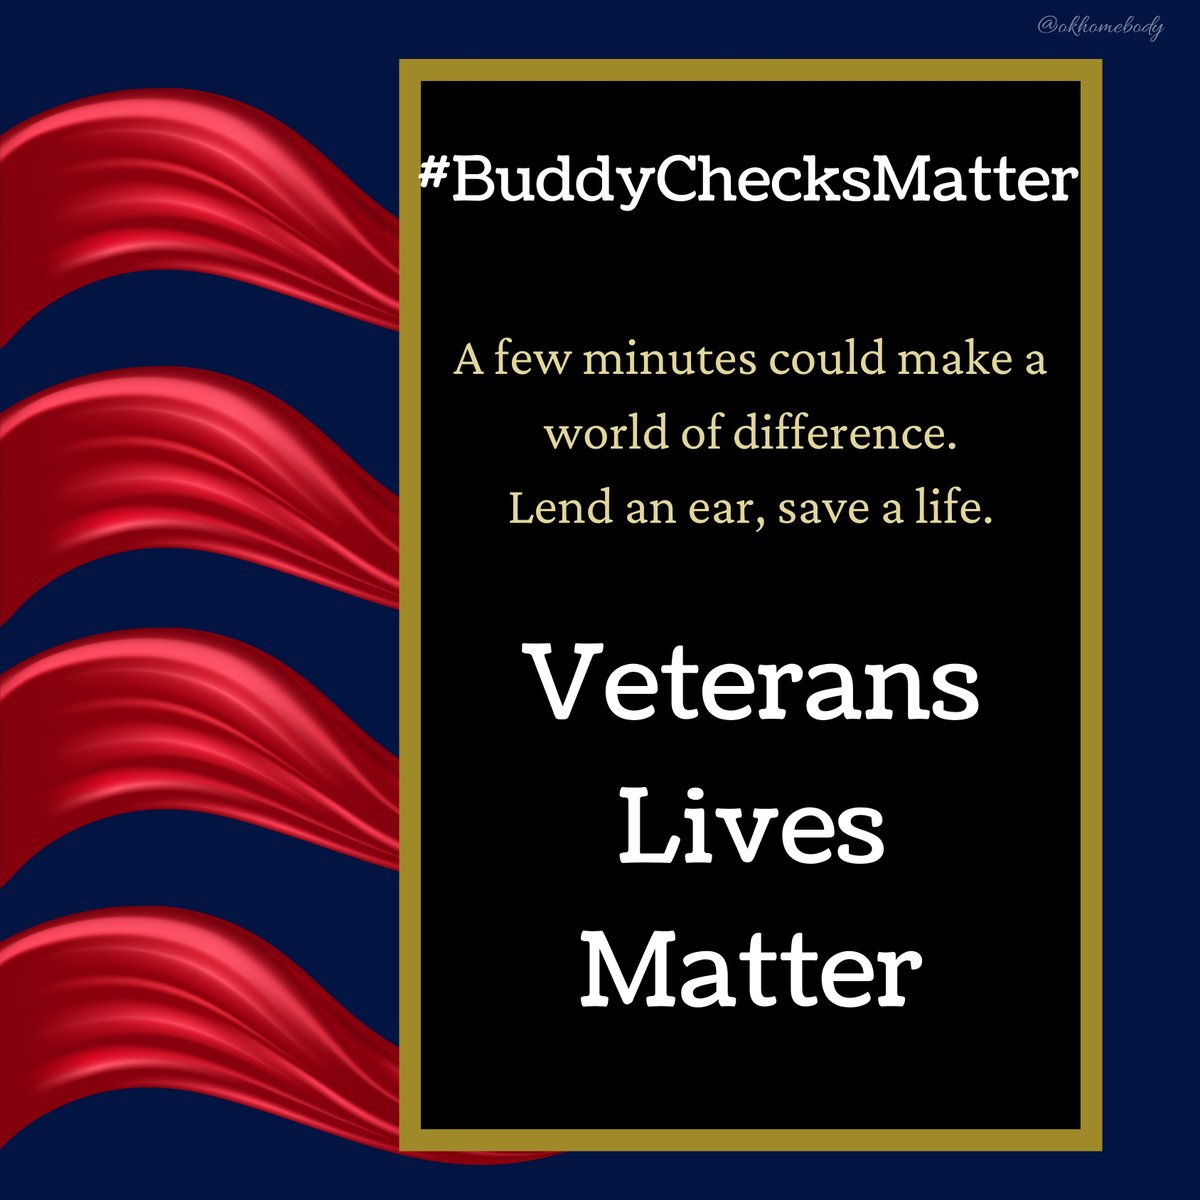 🇺🇸 #WarriorWednesday #Buddy✅with #Veterans 🙏RH
❤️#BuddyChecksMatter because #VeteransLivesMatter❤️
⭐️ 🇺🇸 Repost #EndVeteranSuicide #dial988press1 🇺🇸⭐️
🇺🇸 @NelisonDarin @RogerMcghee6 @JamesBuckl3779⭐️
🇺🇸 @srasberry1 @MAC_ARMY1 @greatimp@ke_jenning3137⭐️
🇺🇸 @army_abn3rdTime…